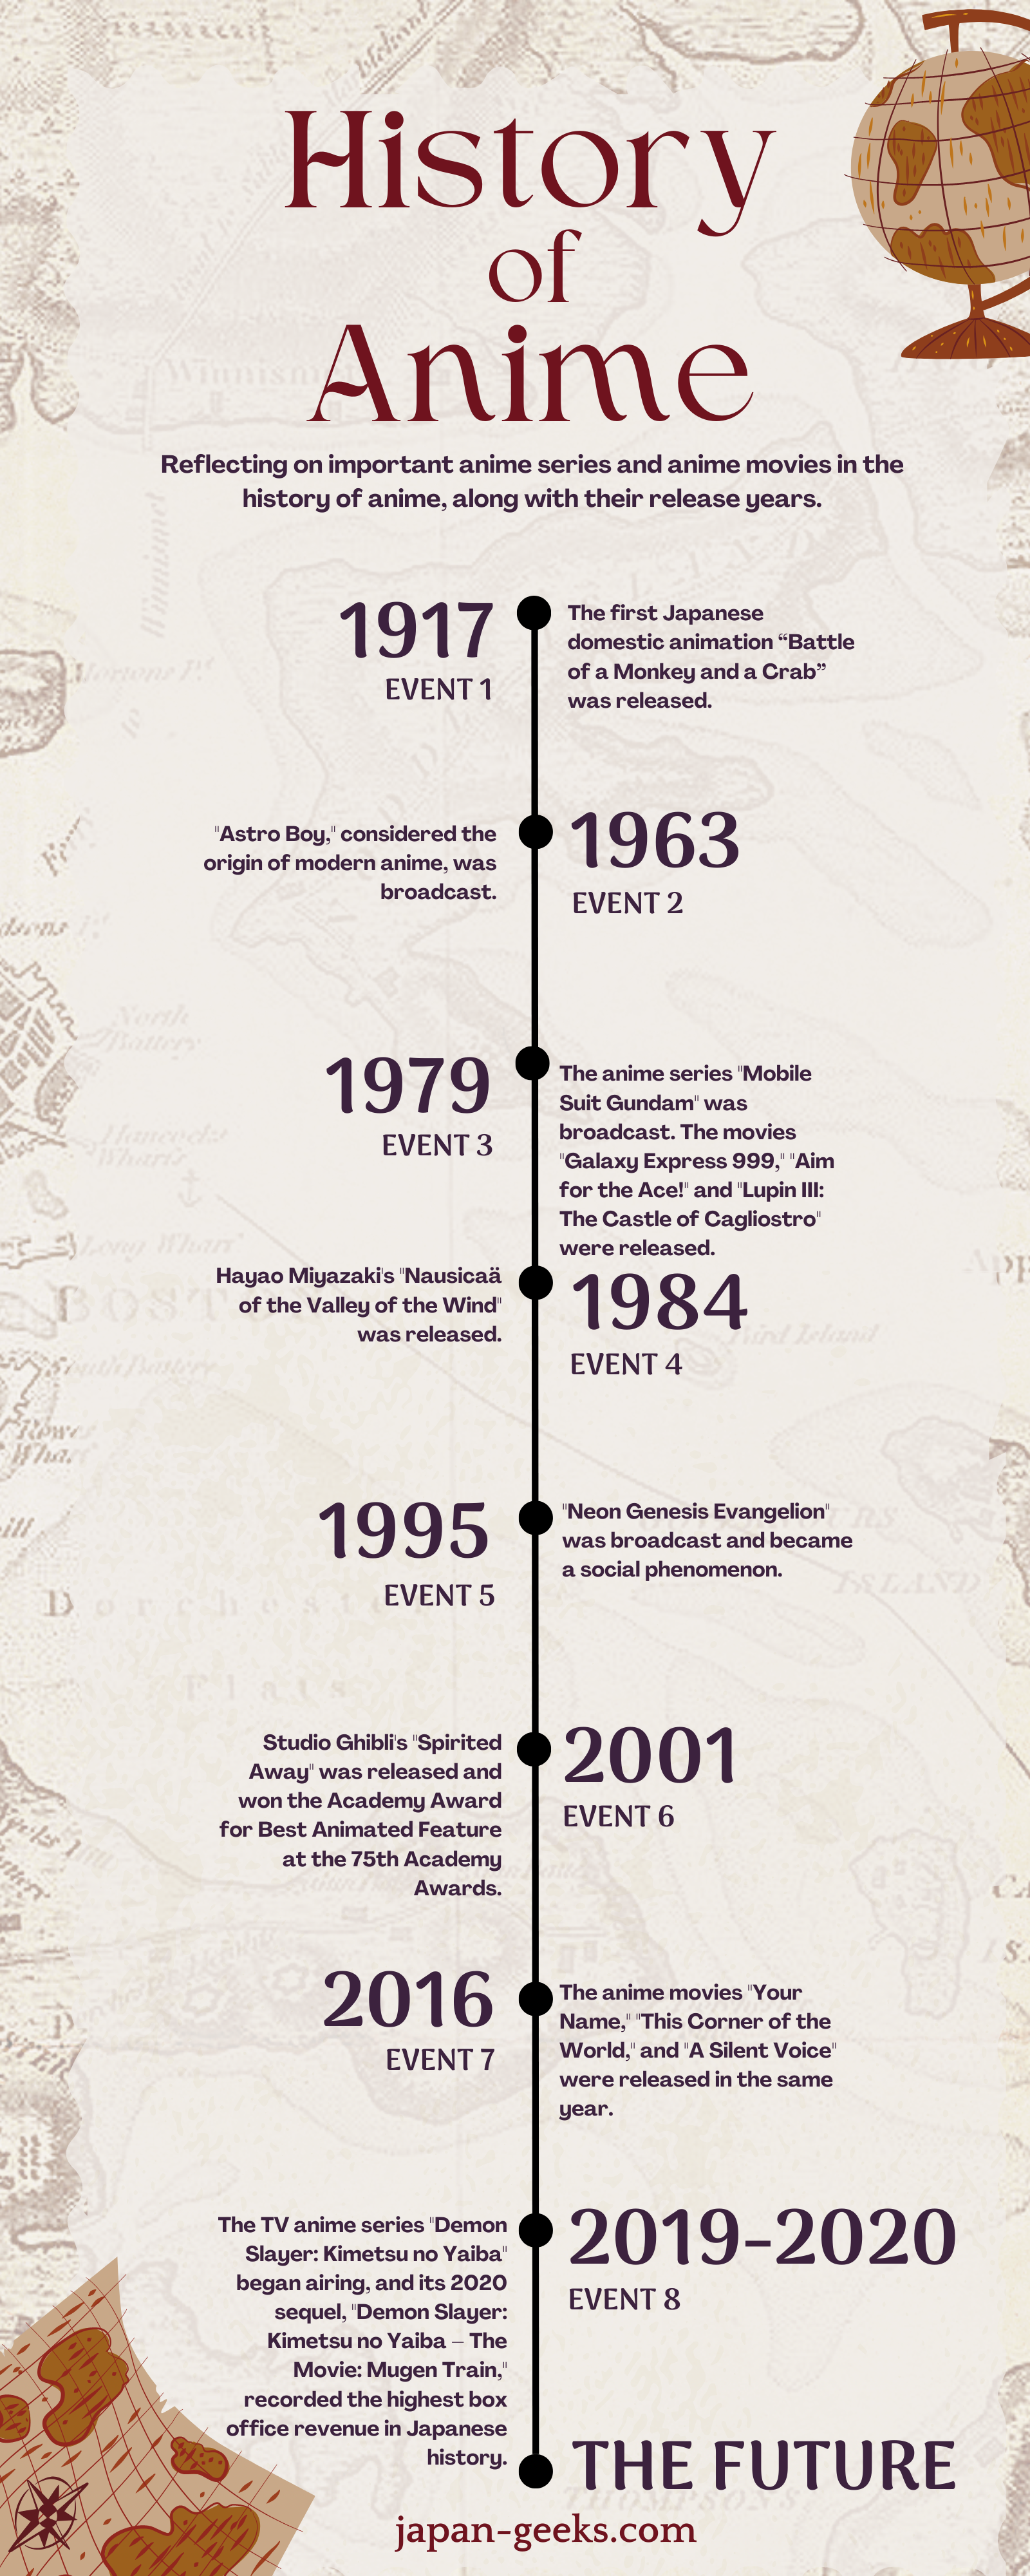 Timeline of Anime History